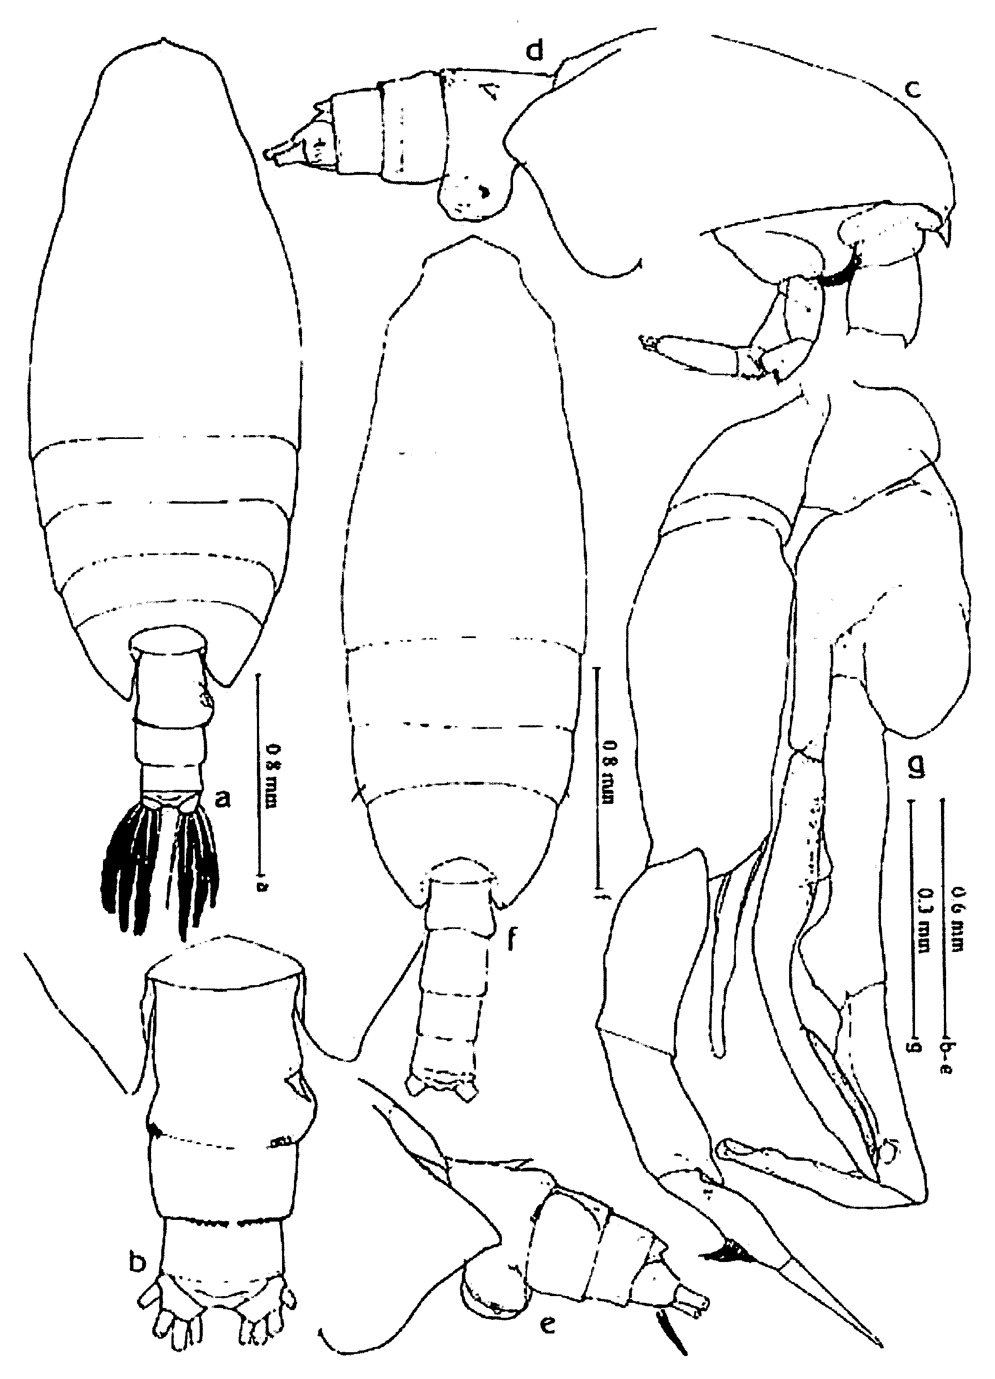 Species Undeuchaeta plumosa - Plate 18 of morphological figures